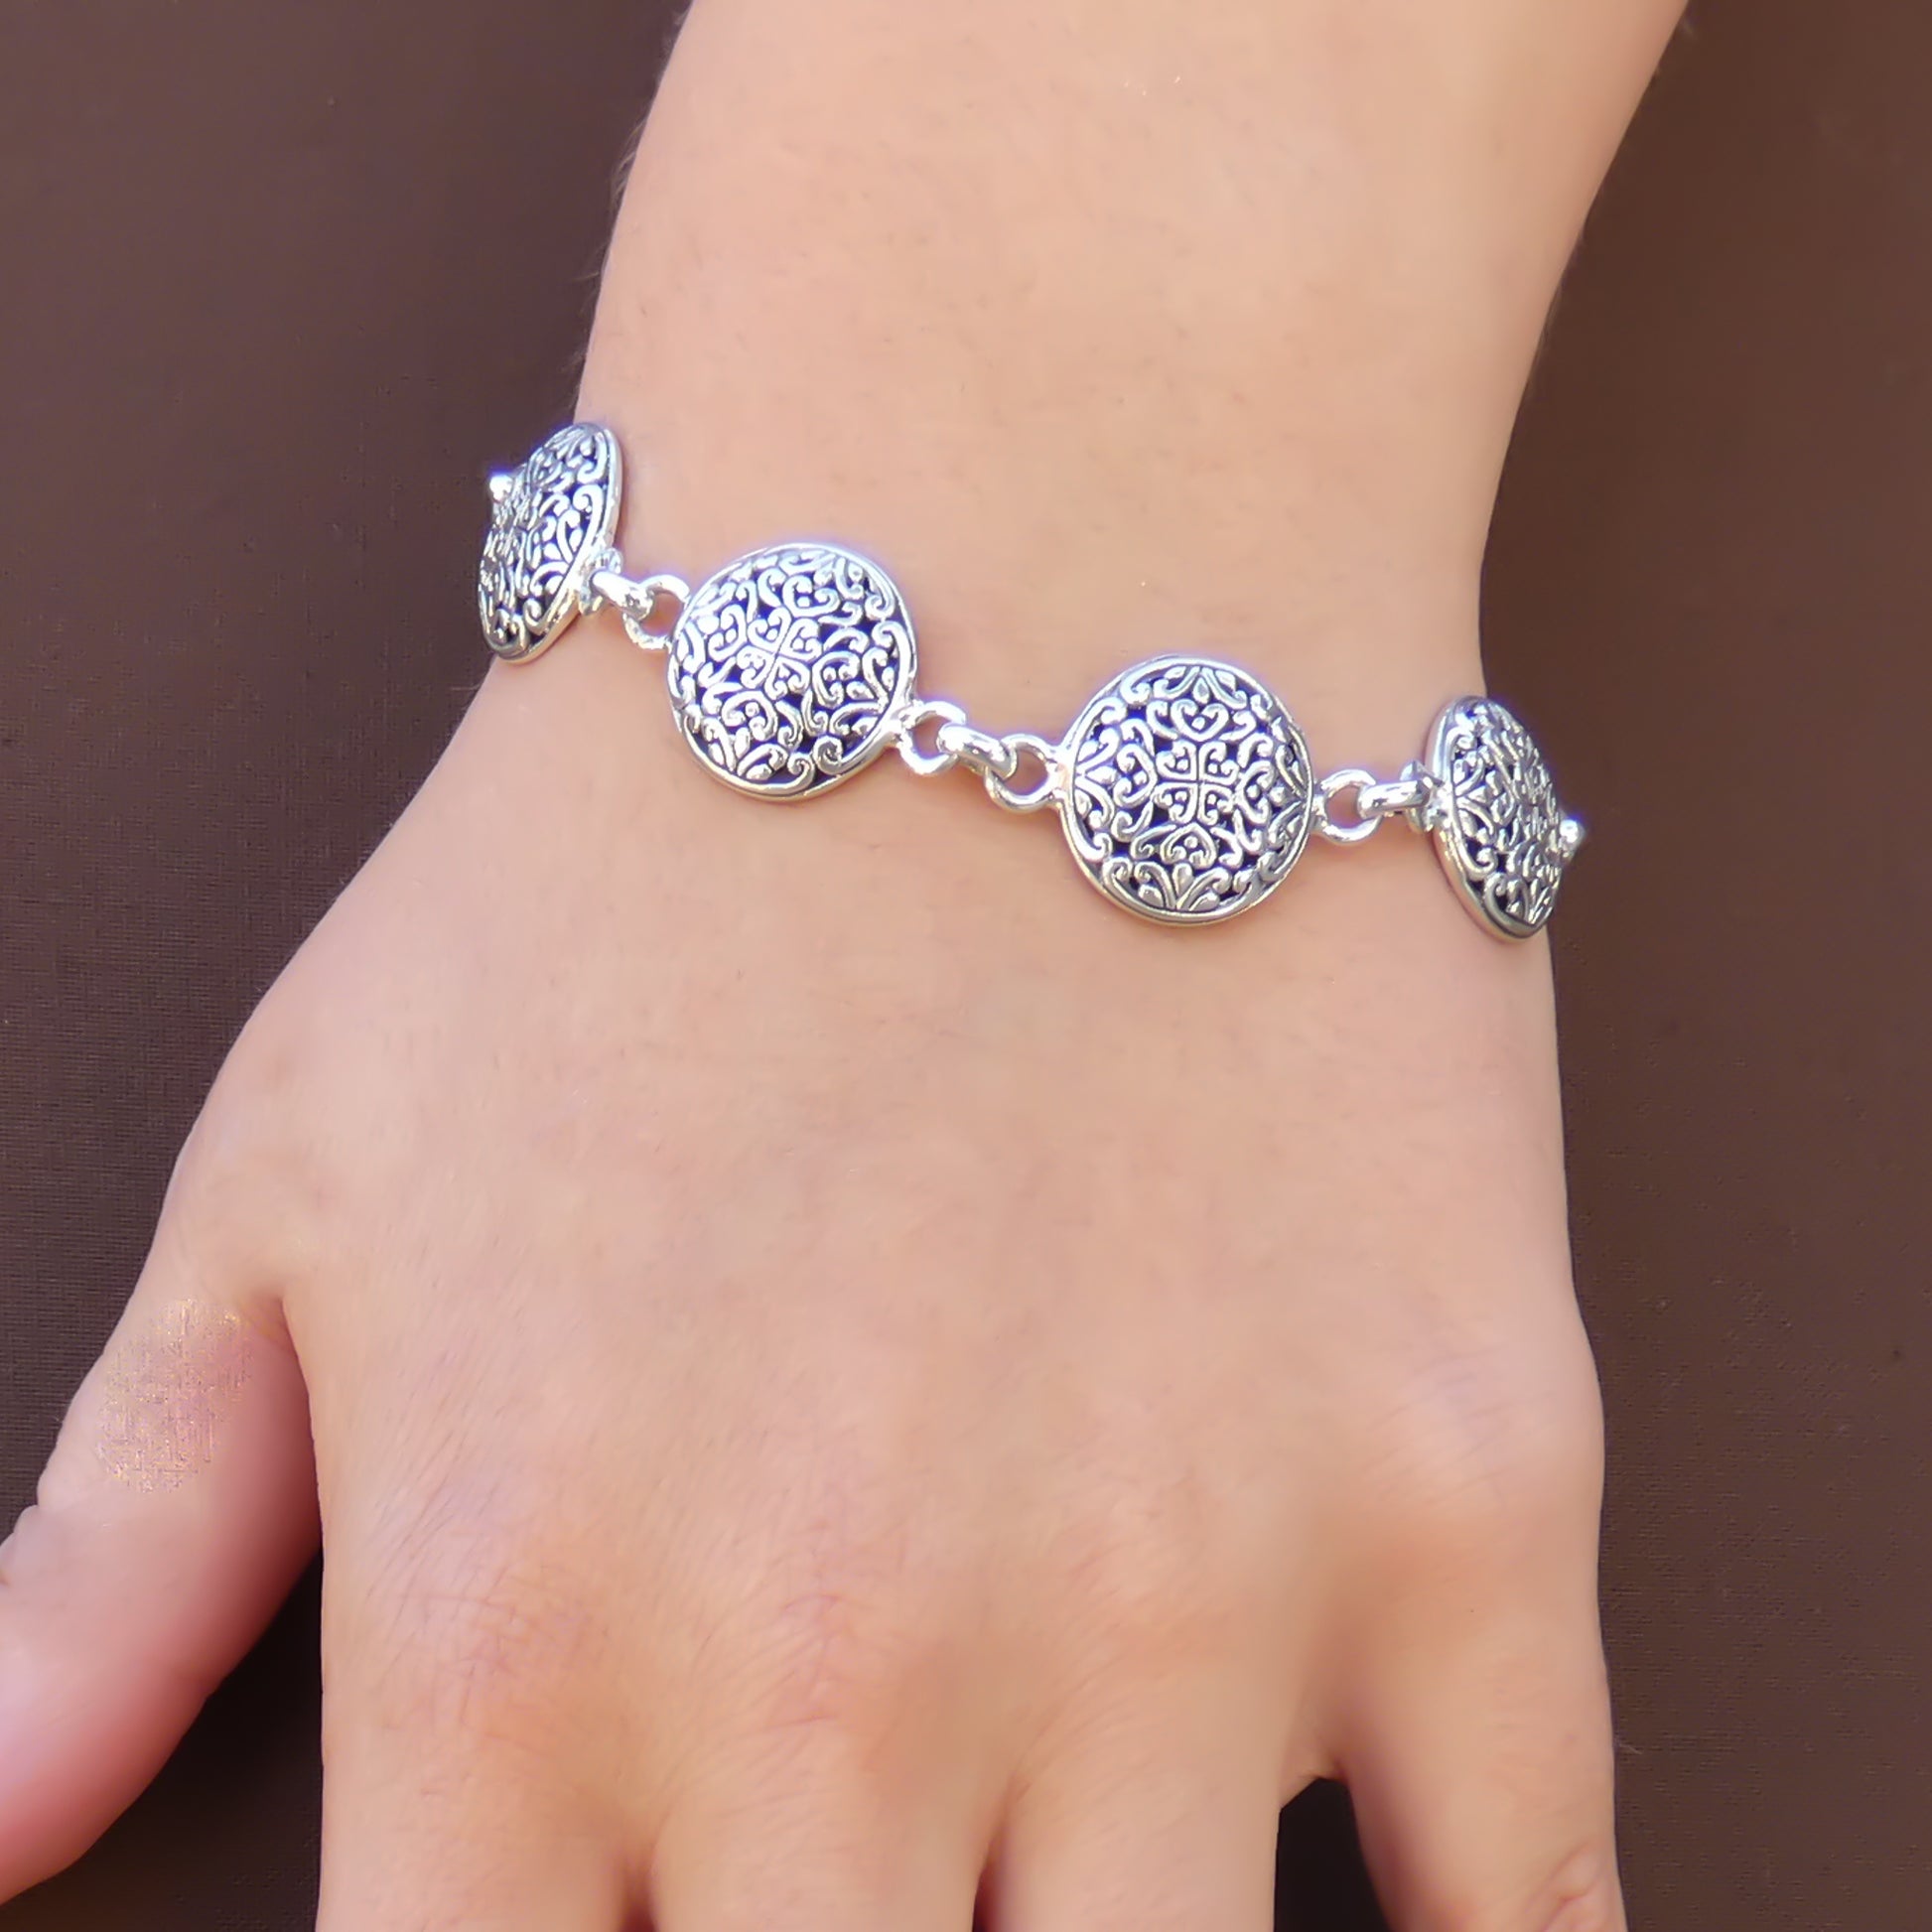 Woman wearing an ornate round link silver bracelet.